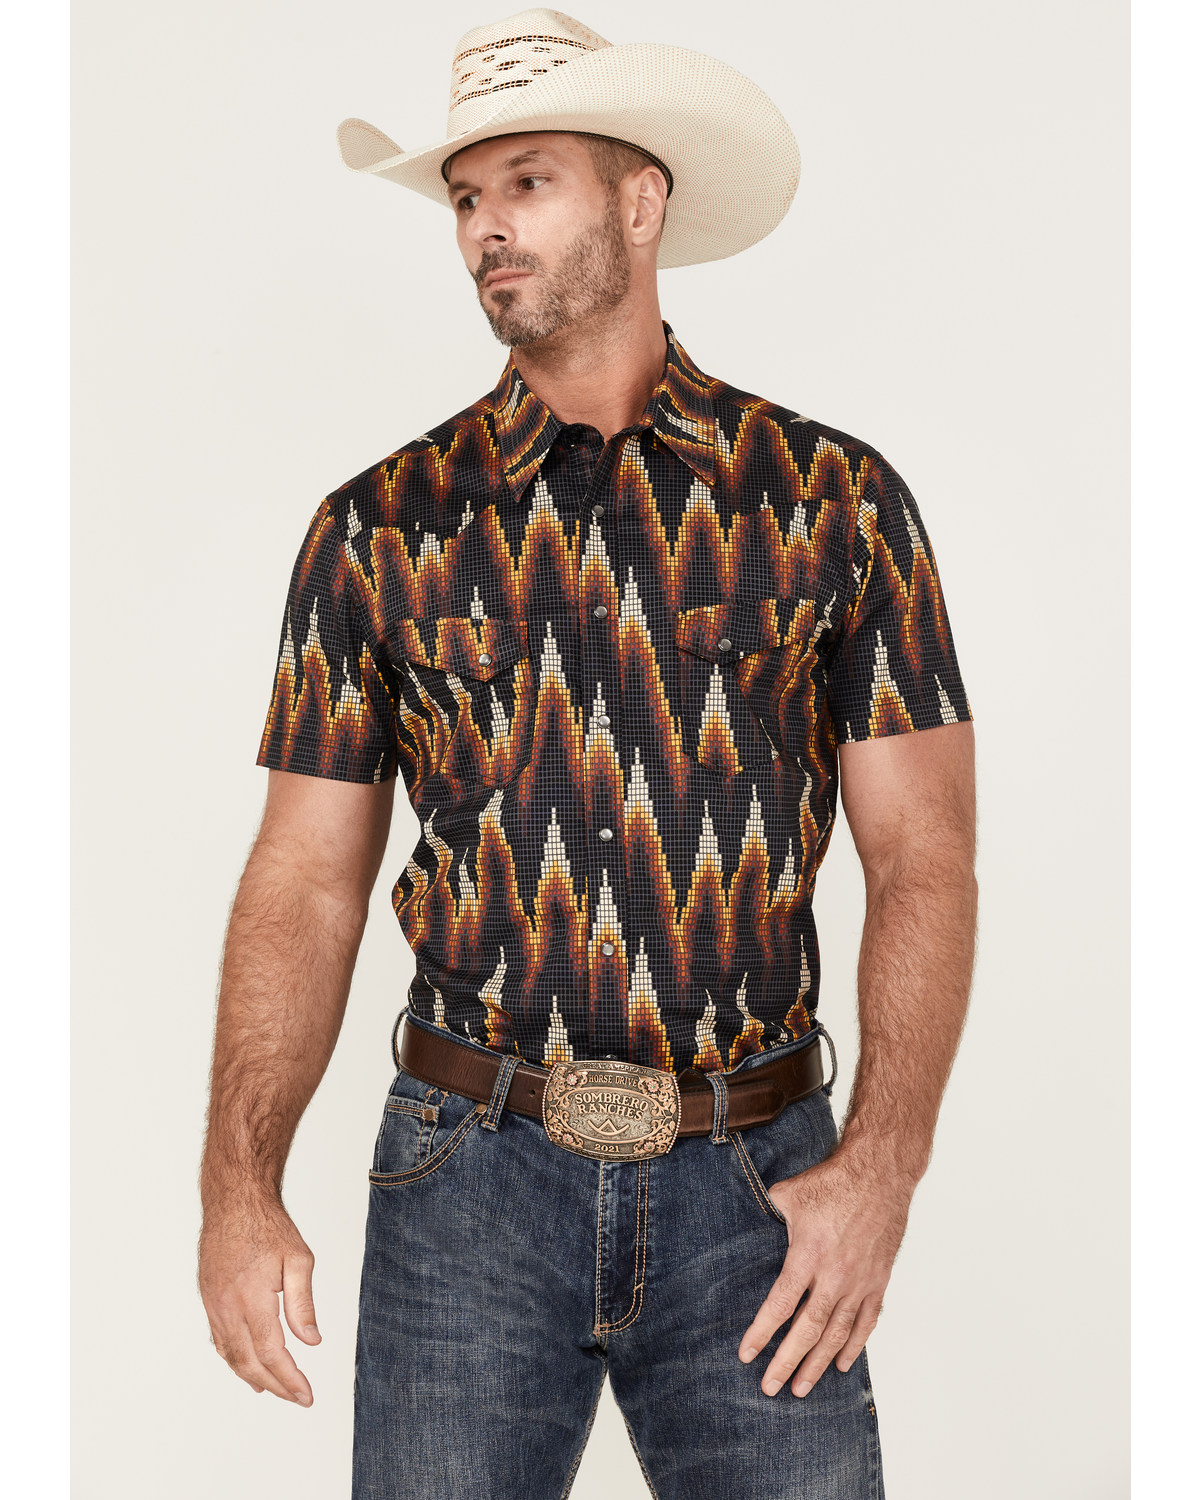 Dale Brisby Men's Digital Print Short Sleeve Snap Western Shirt